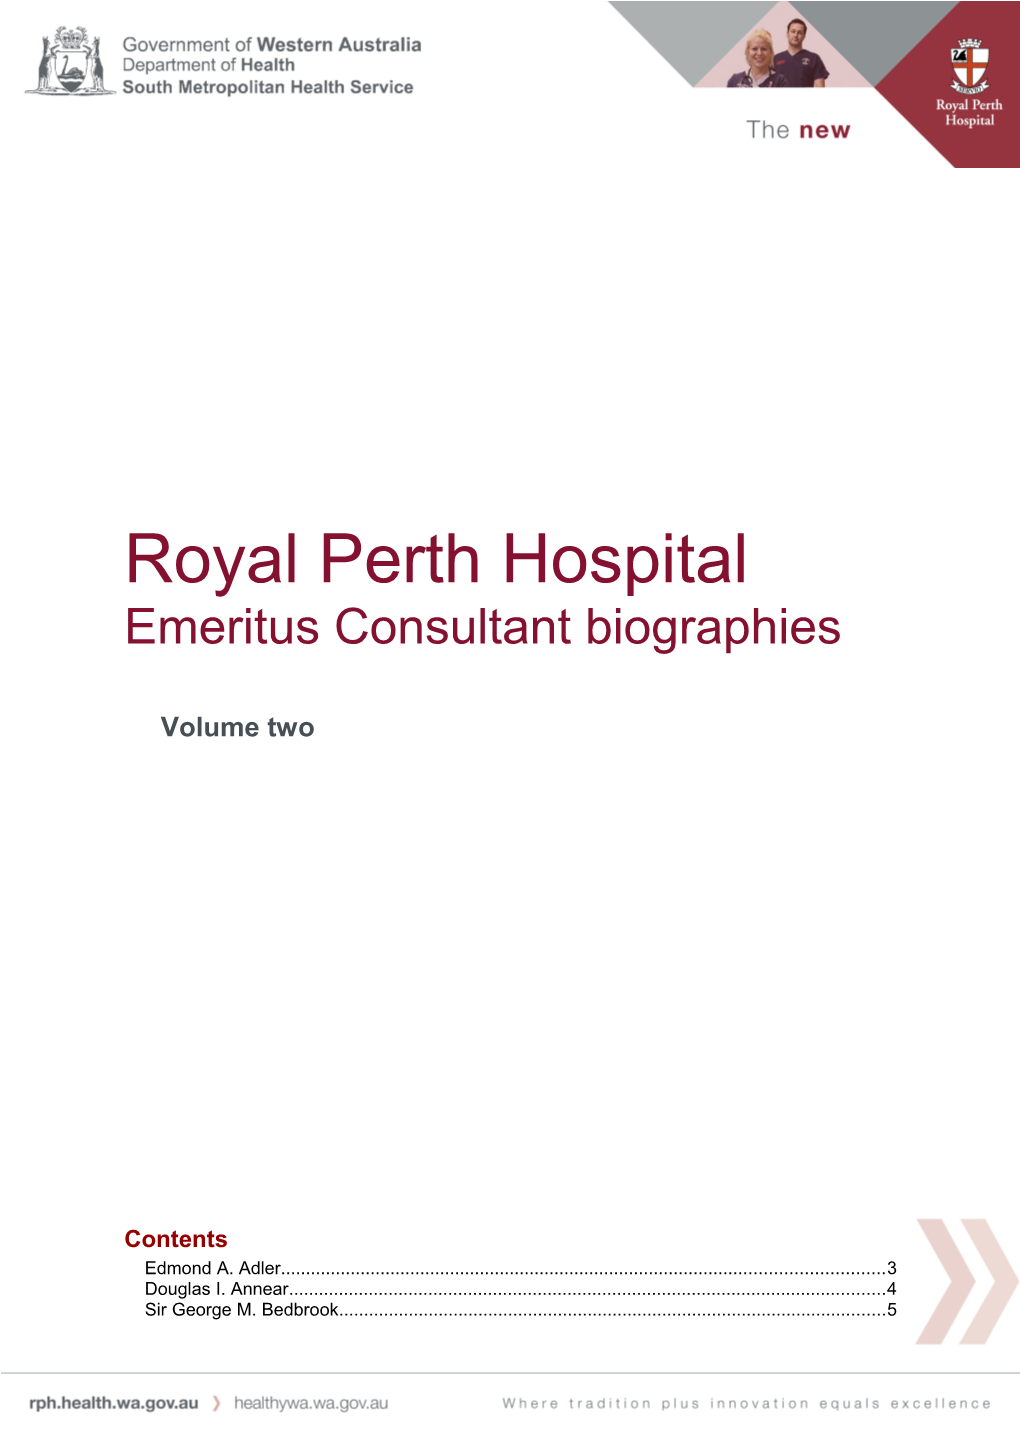 Royal Perth Hospital Emeritus Consultant Biographies s1